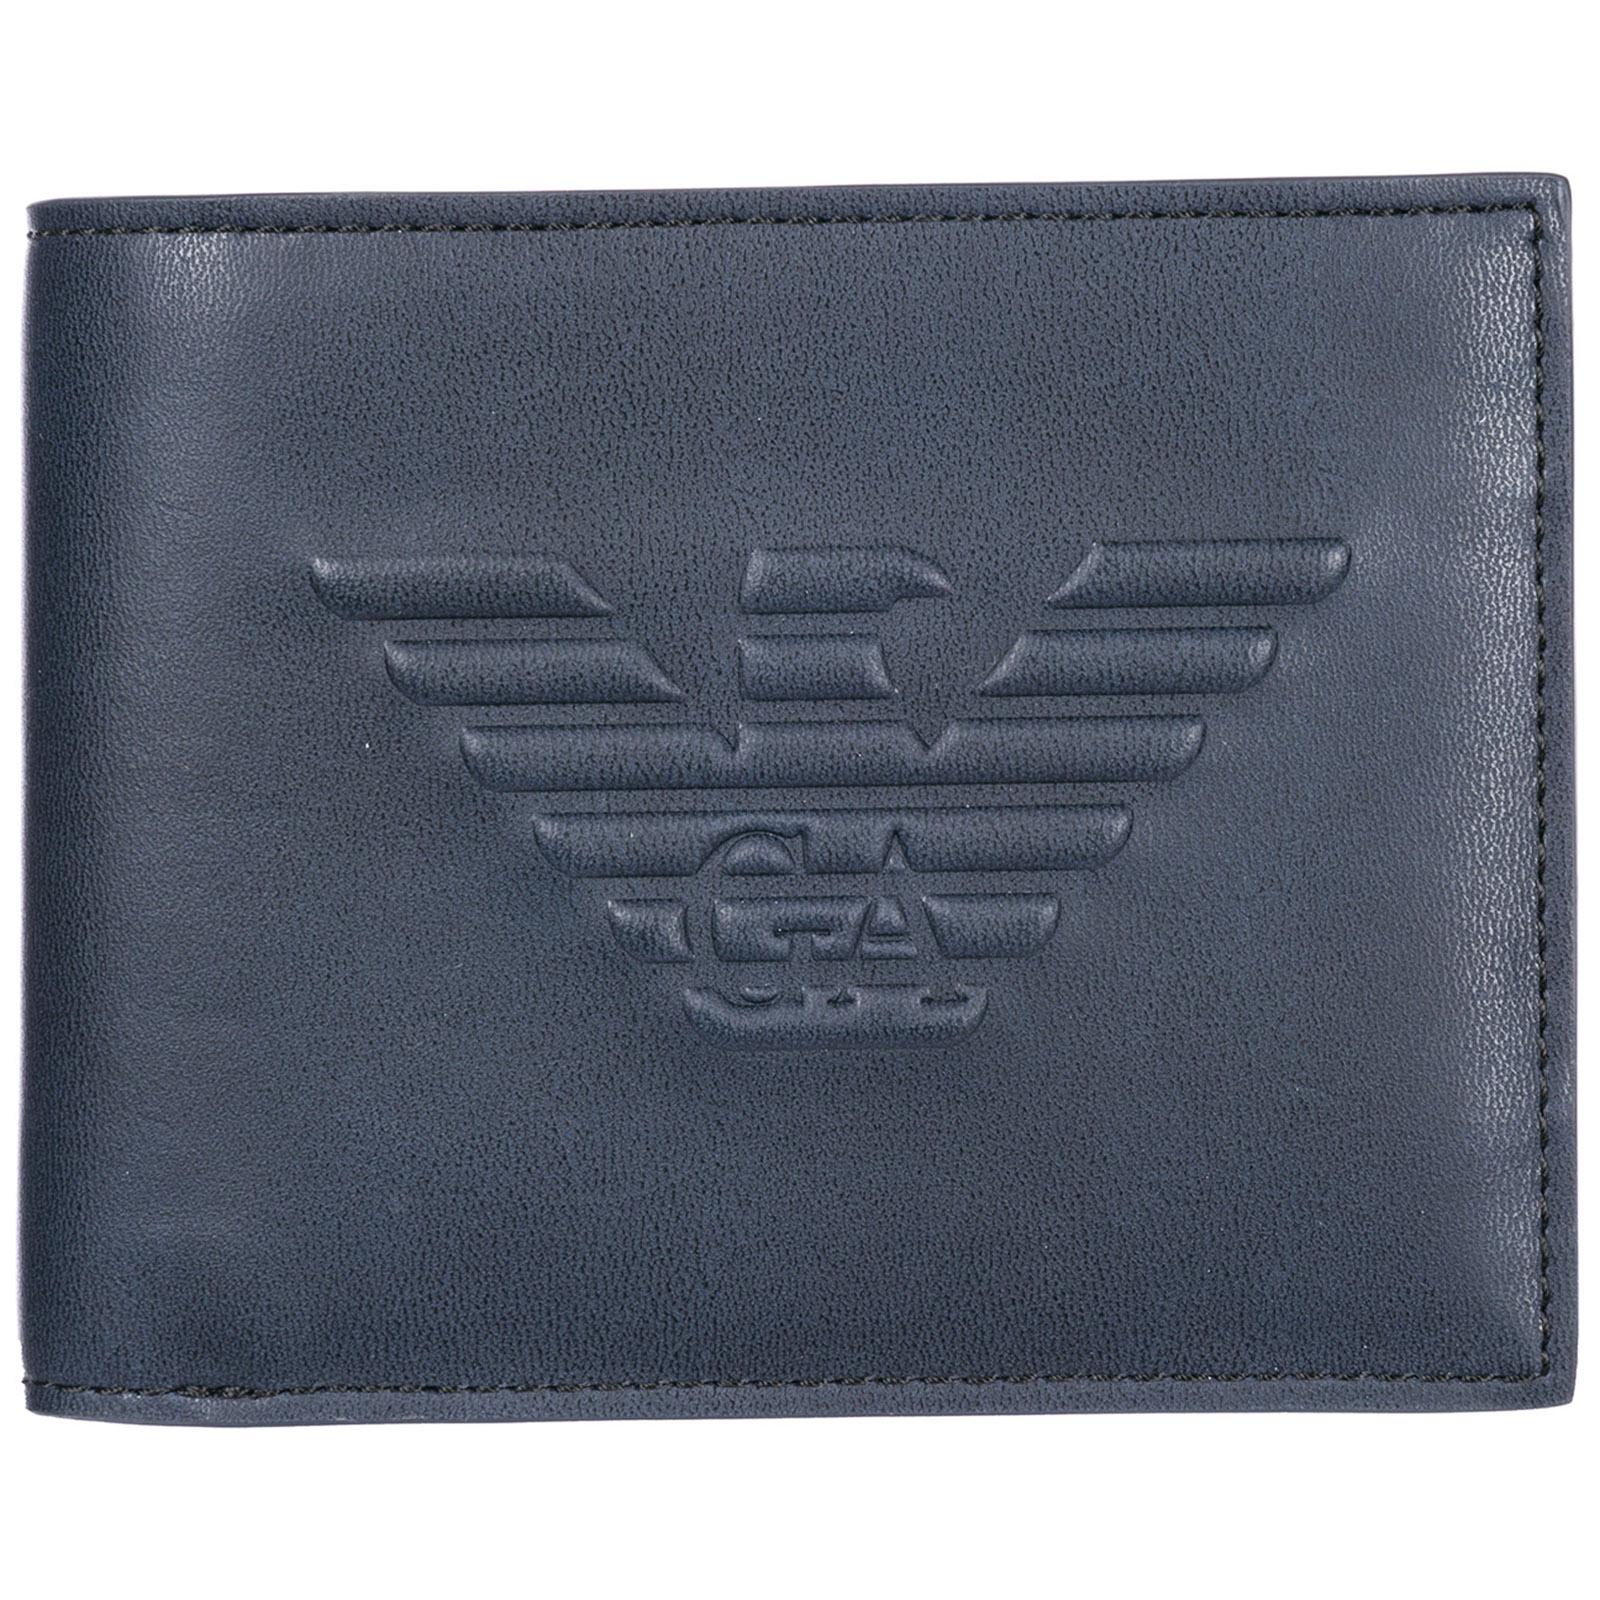 Lyst - Emporio Armani Wallet Coin Case Holder Purse Card Bifold in Blue ...